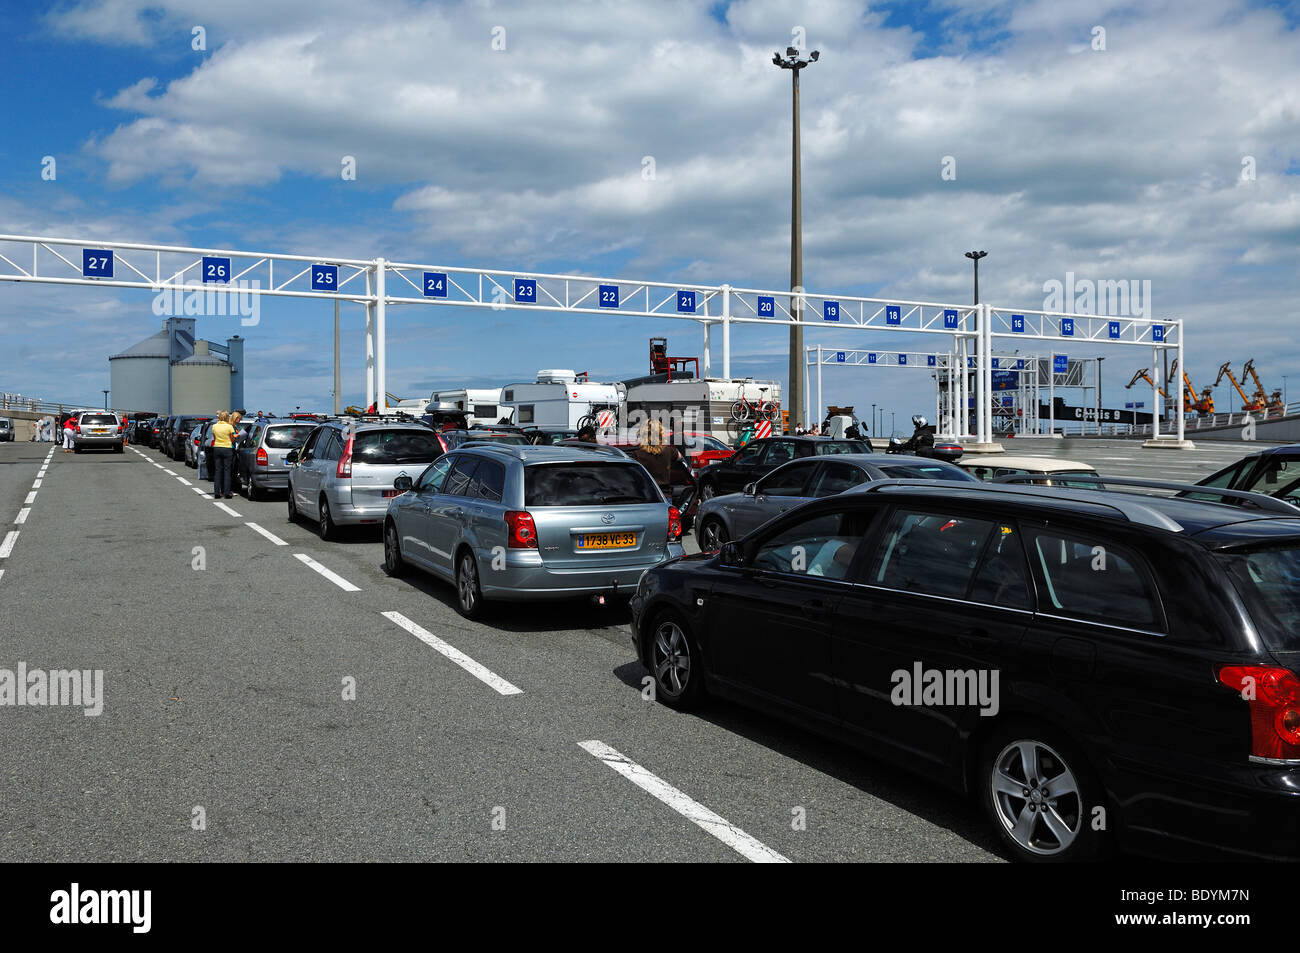 Autos warten auf das Auto an Bord der Fähre von Calais-Dover Calais, Frankreich, Europa Stockfoto